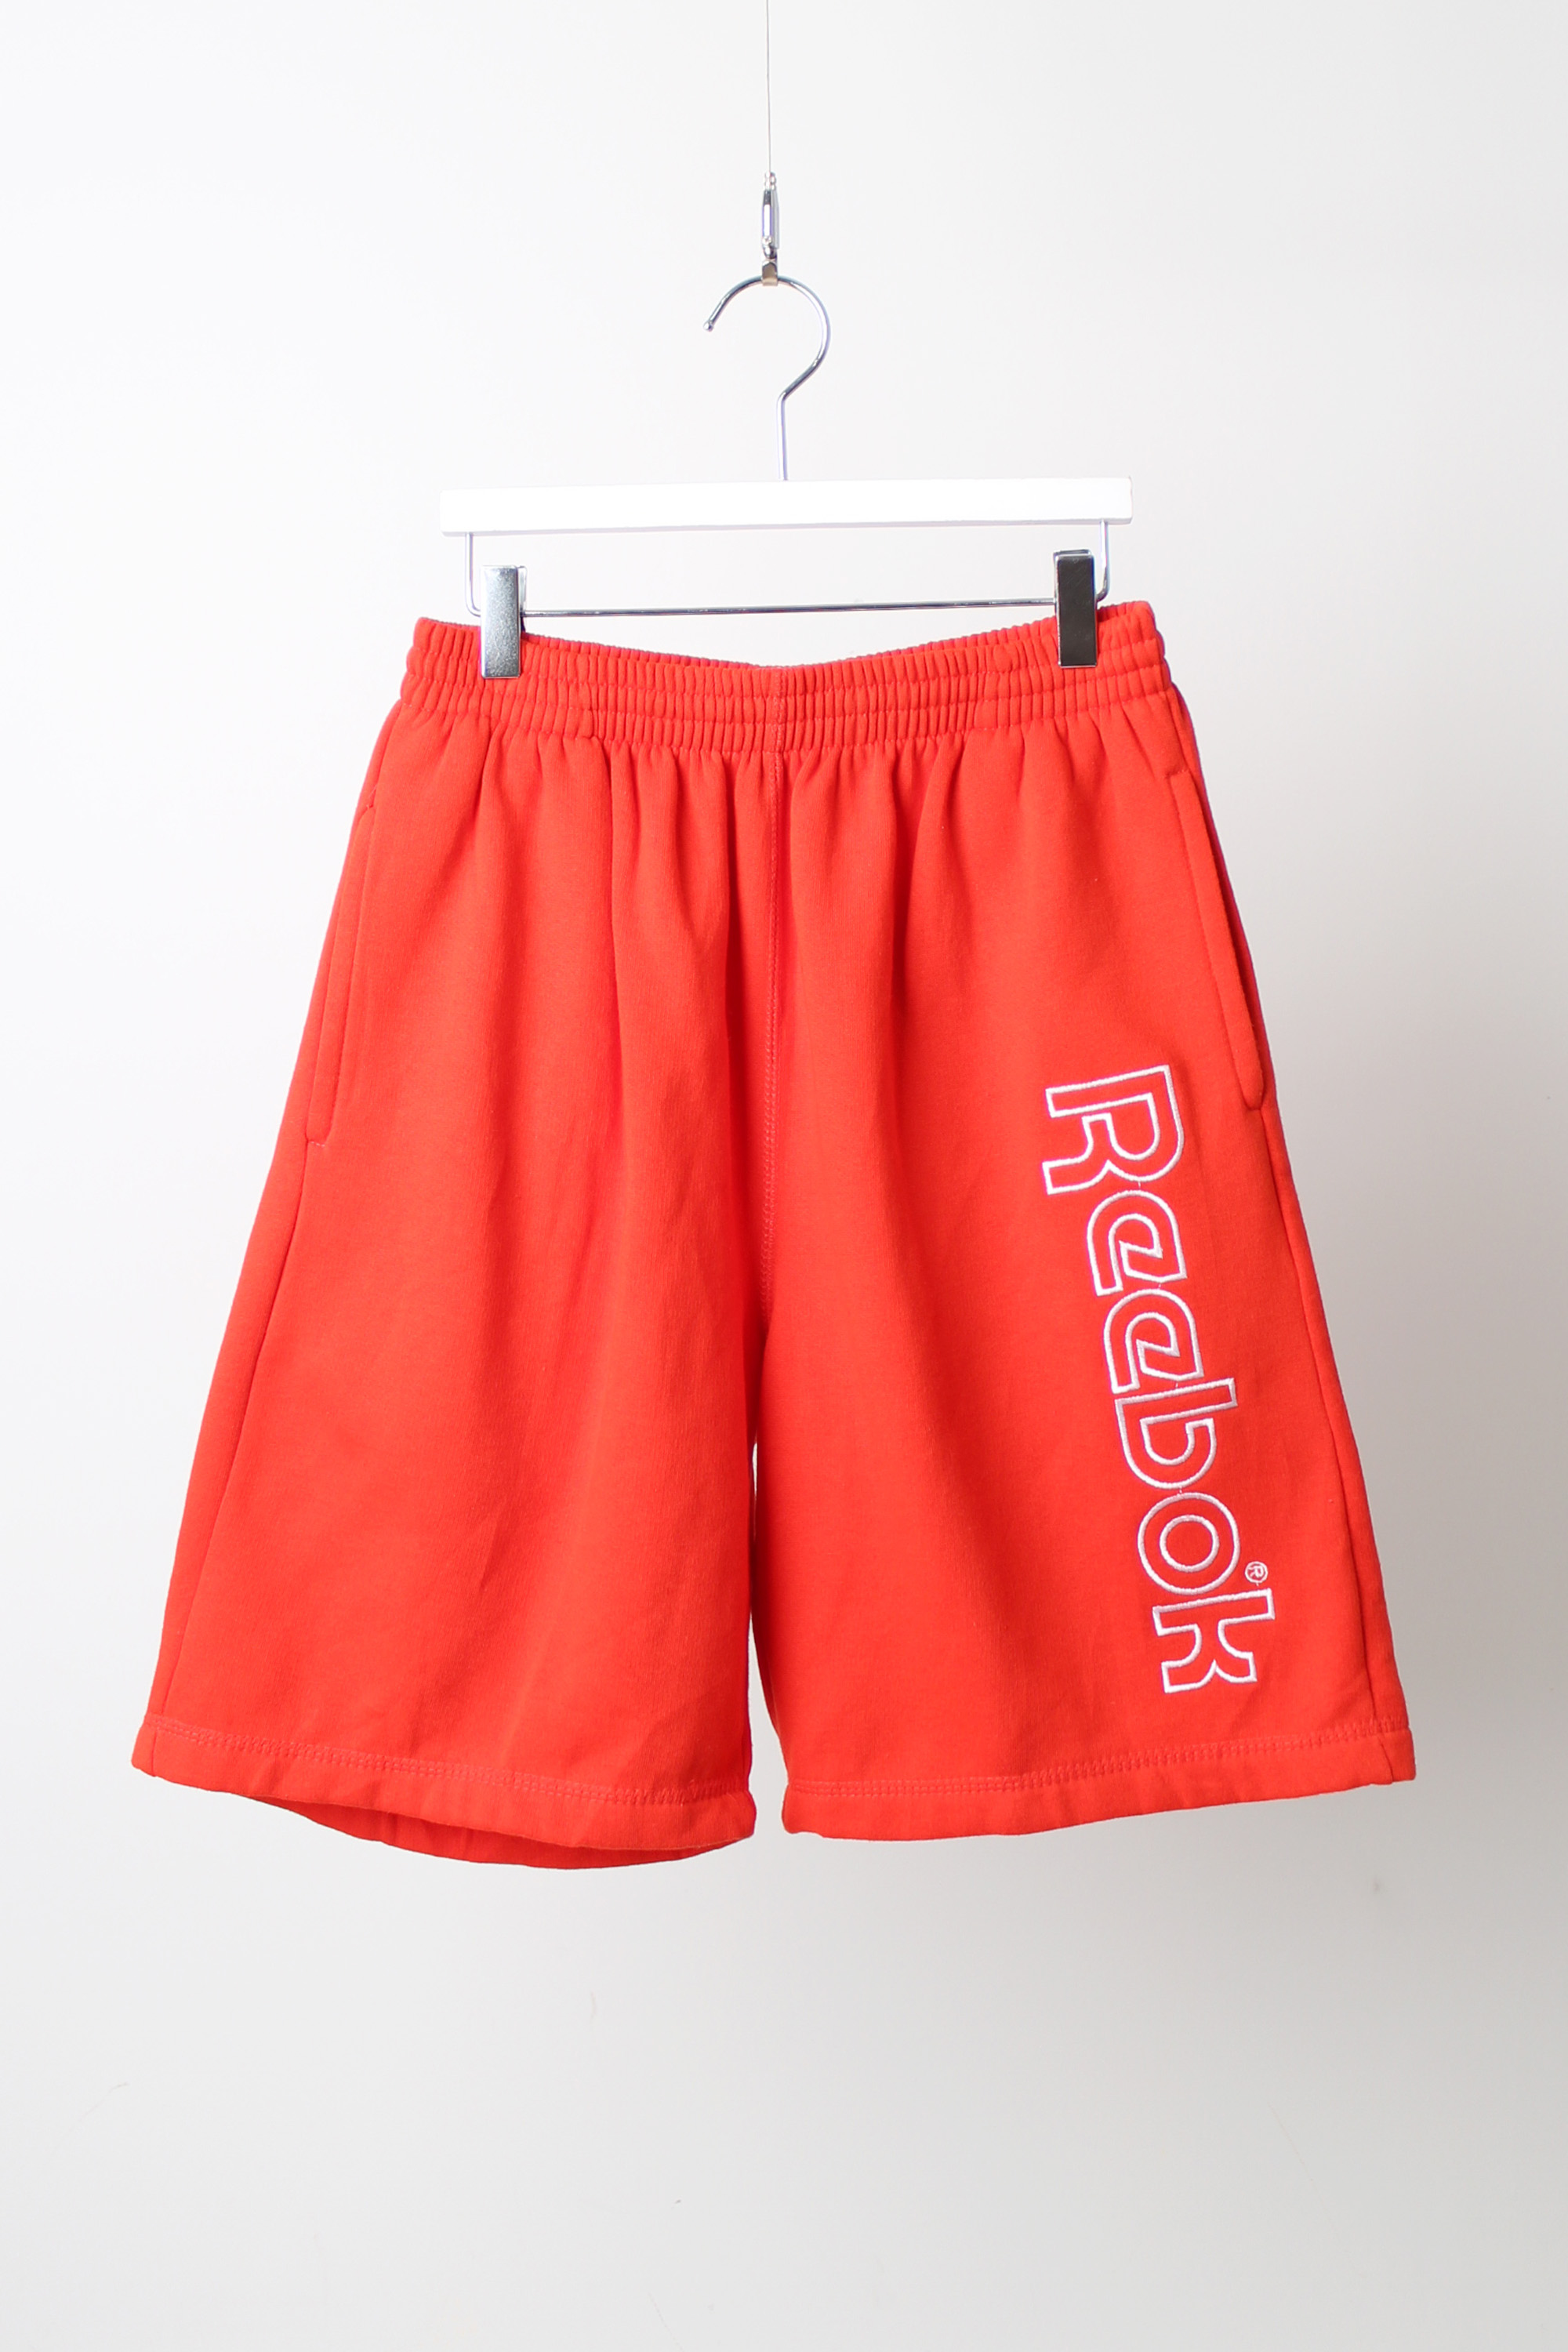 Vintage reebok Shorts